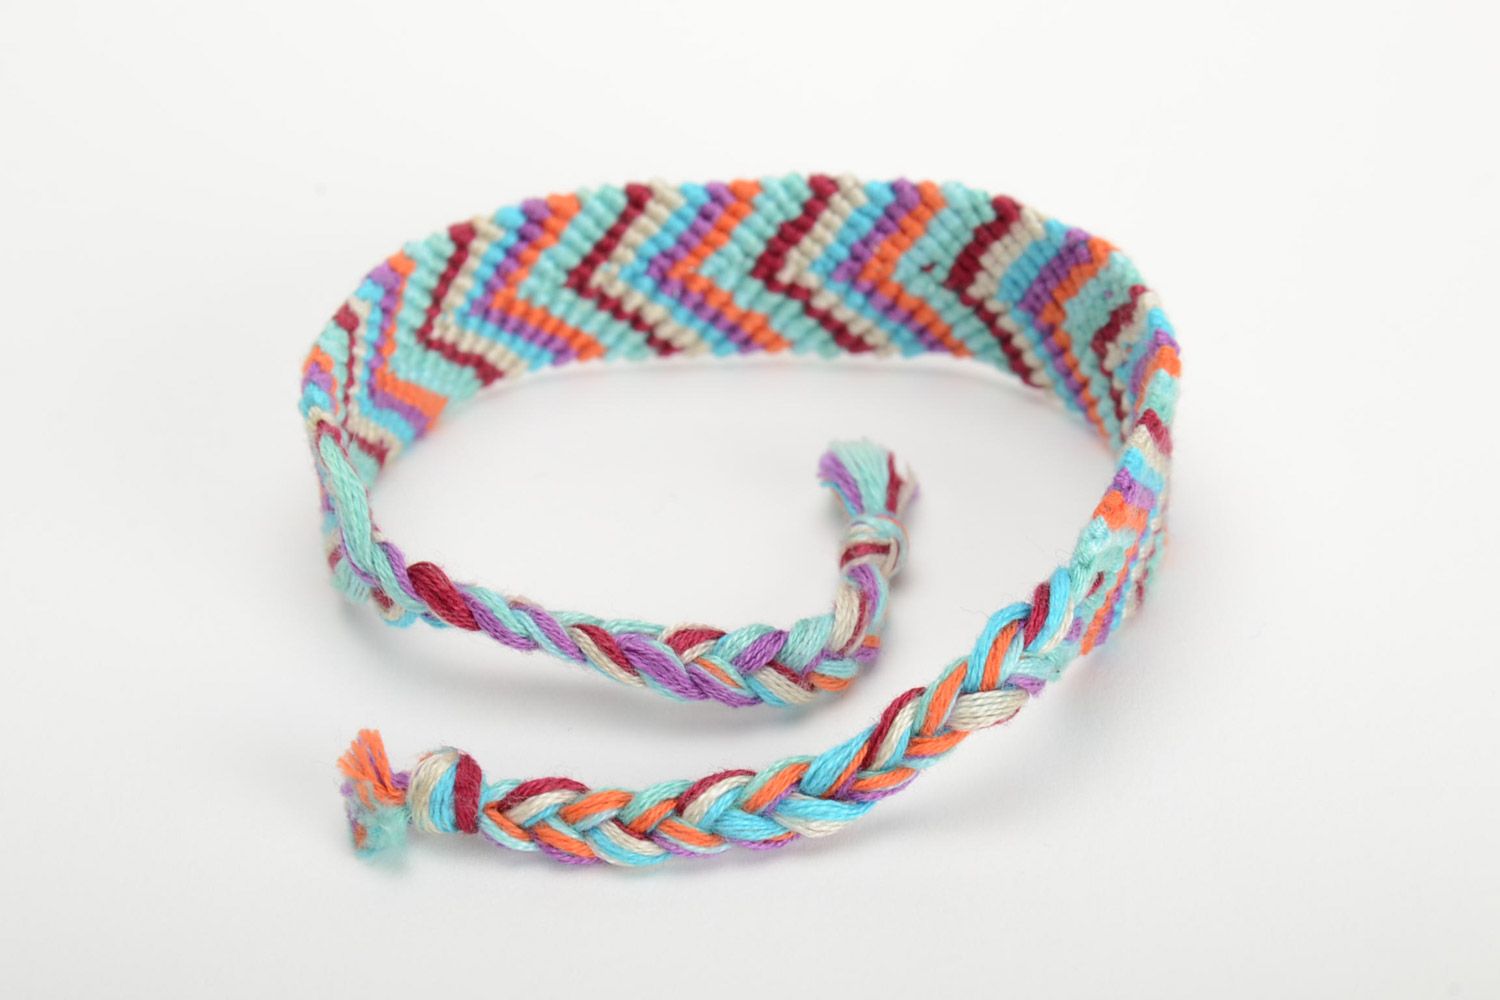 Handmade stylish friendship wrist bracelet woven of colorful embroidery floss photo 3